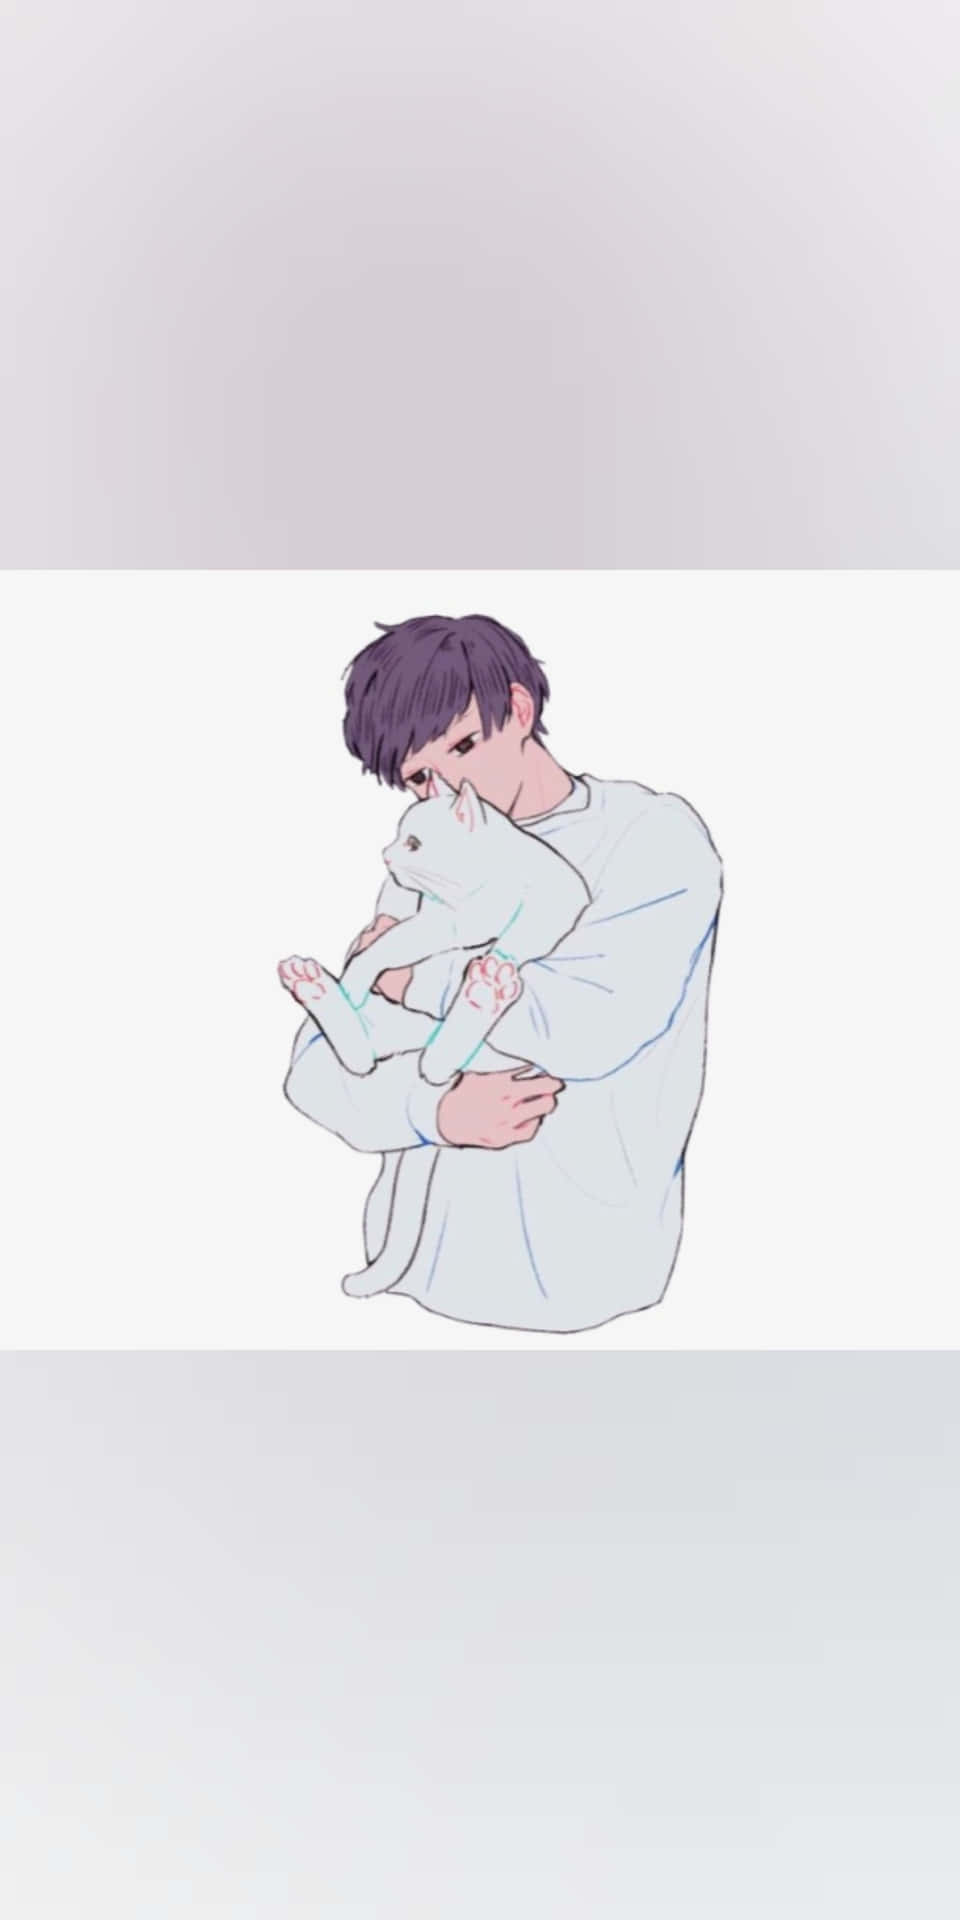 Anime Boy Cuddling Cat Aesthetic Wallpaper Wallpaper